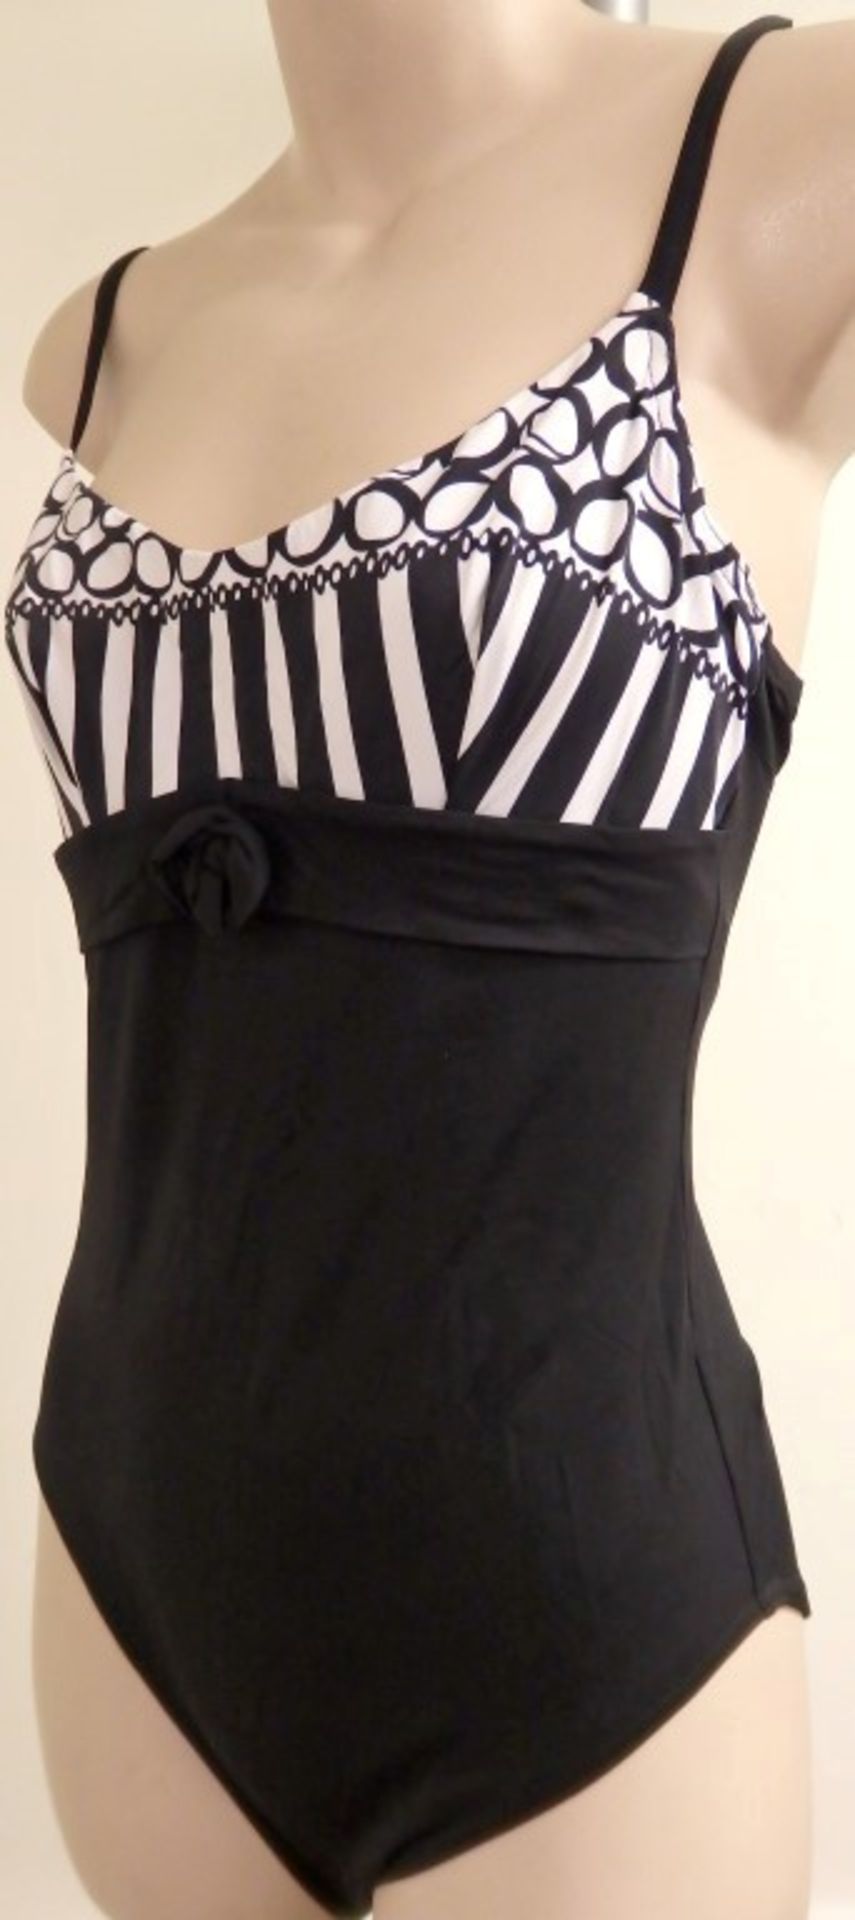 1 x Rasurel - Black/White patterned - Borneo Swimsuit - R20435 - Size 2C - UK 32 - Fr 85 - EU/Int 70